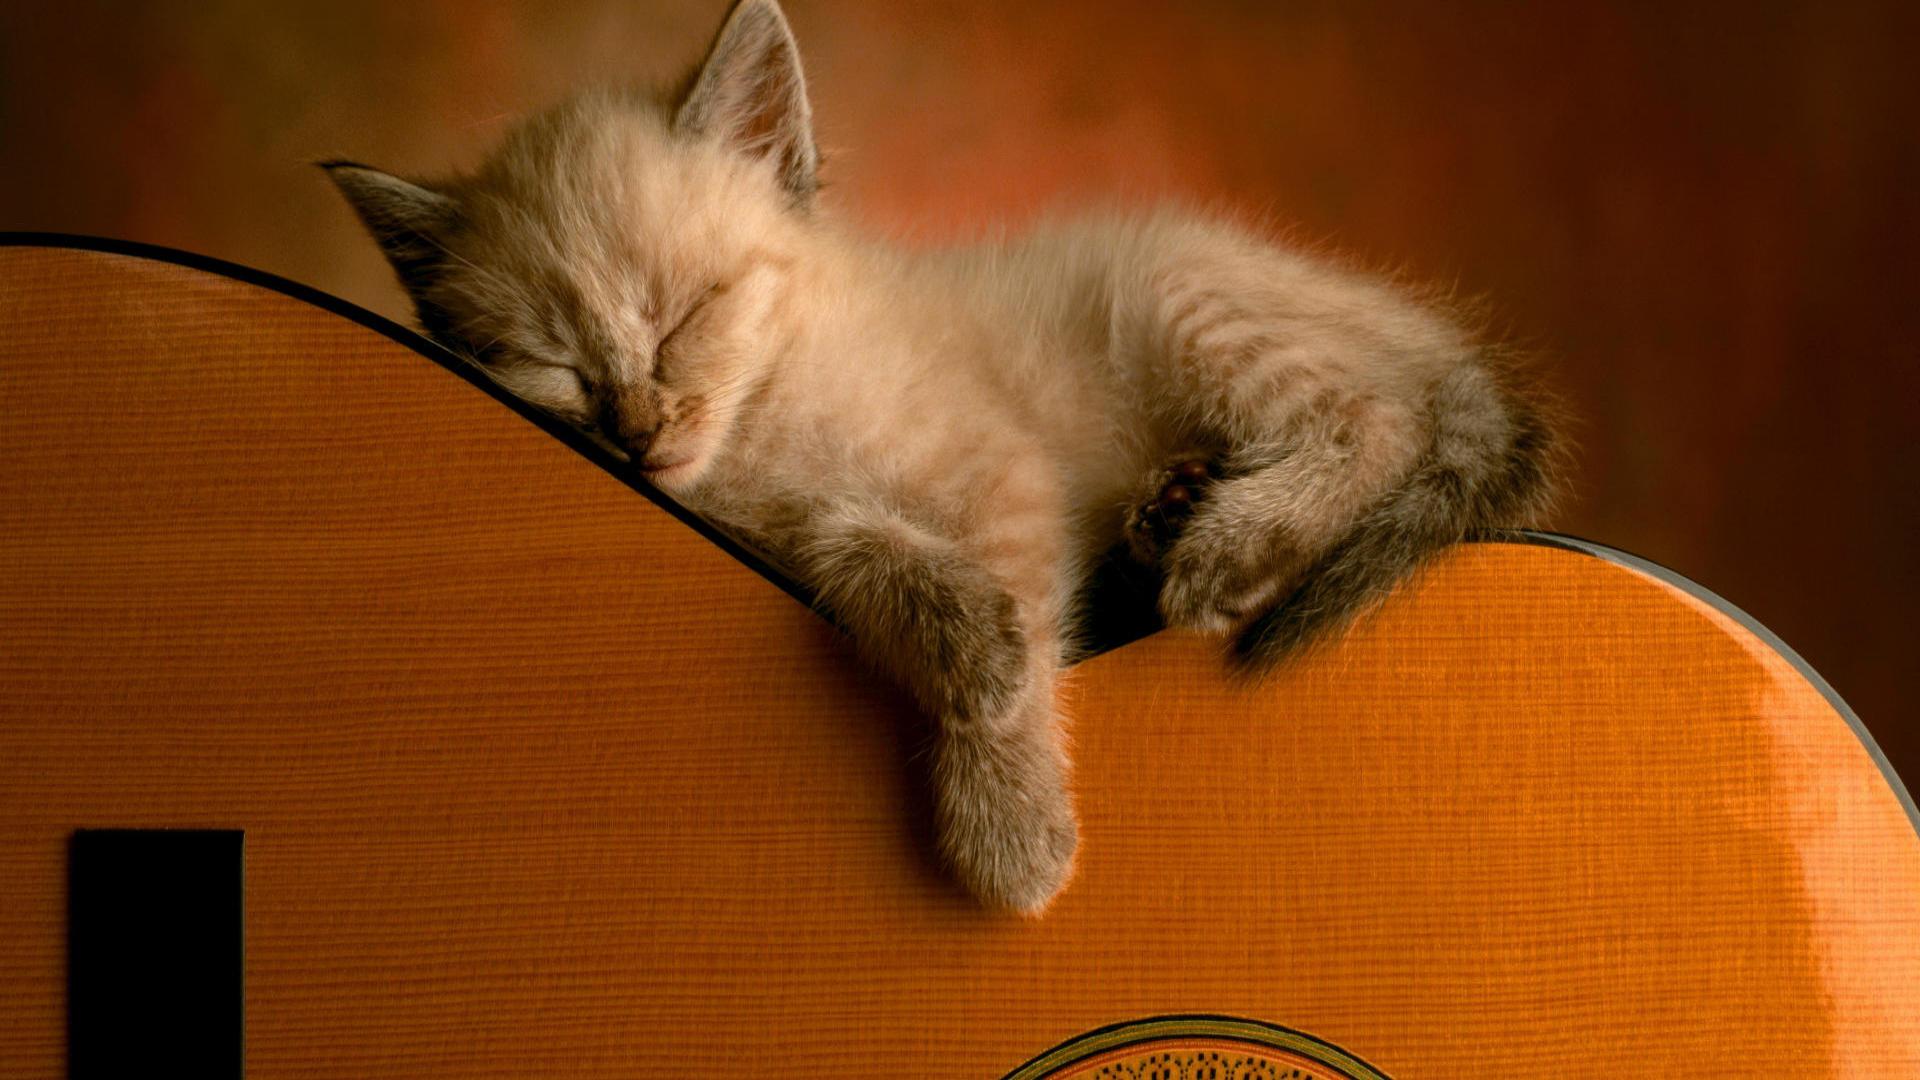 Little Cat Sleep On Guitar Backgrounds Widescreen and HD ...